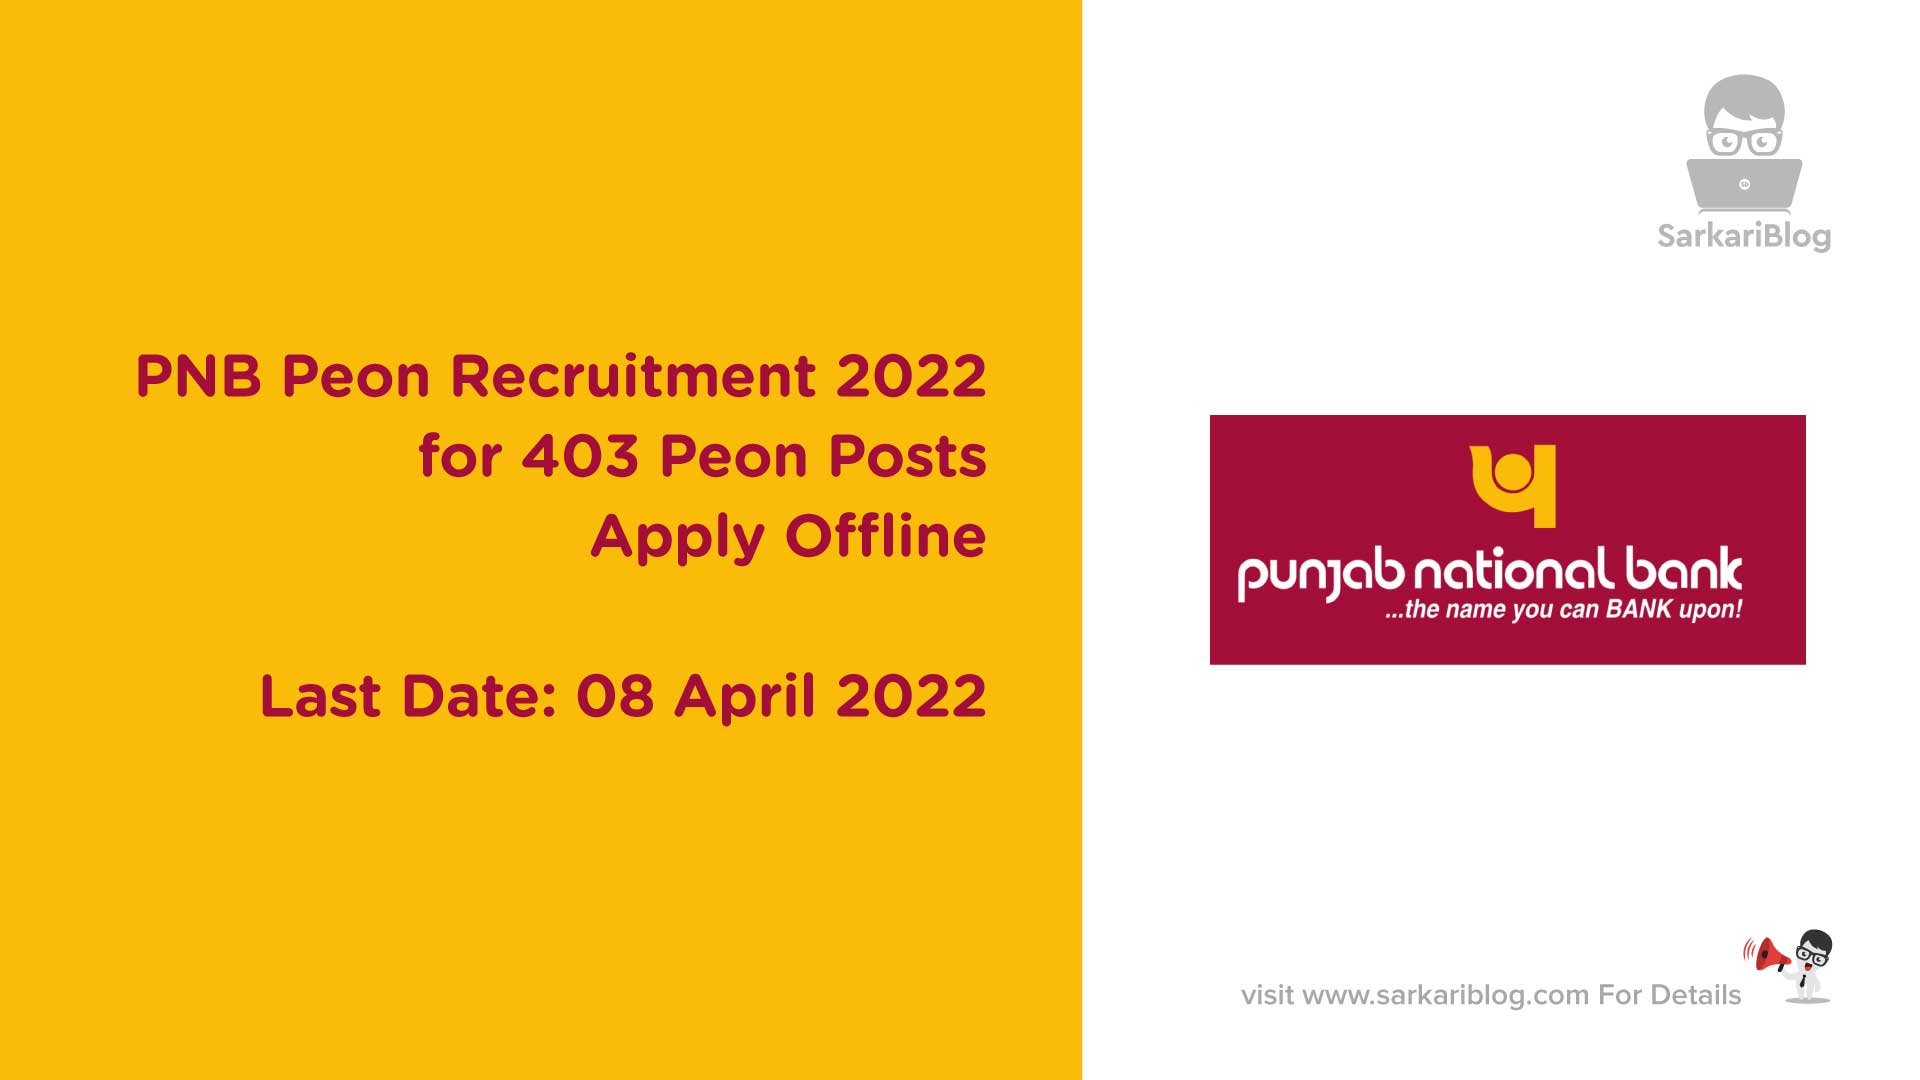 PNB Peon Recruitment 2022